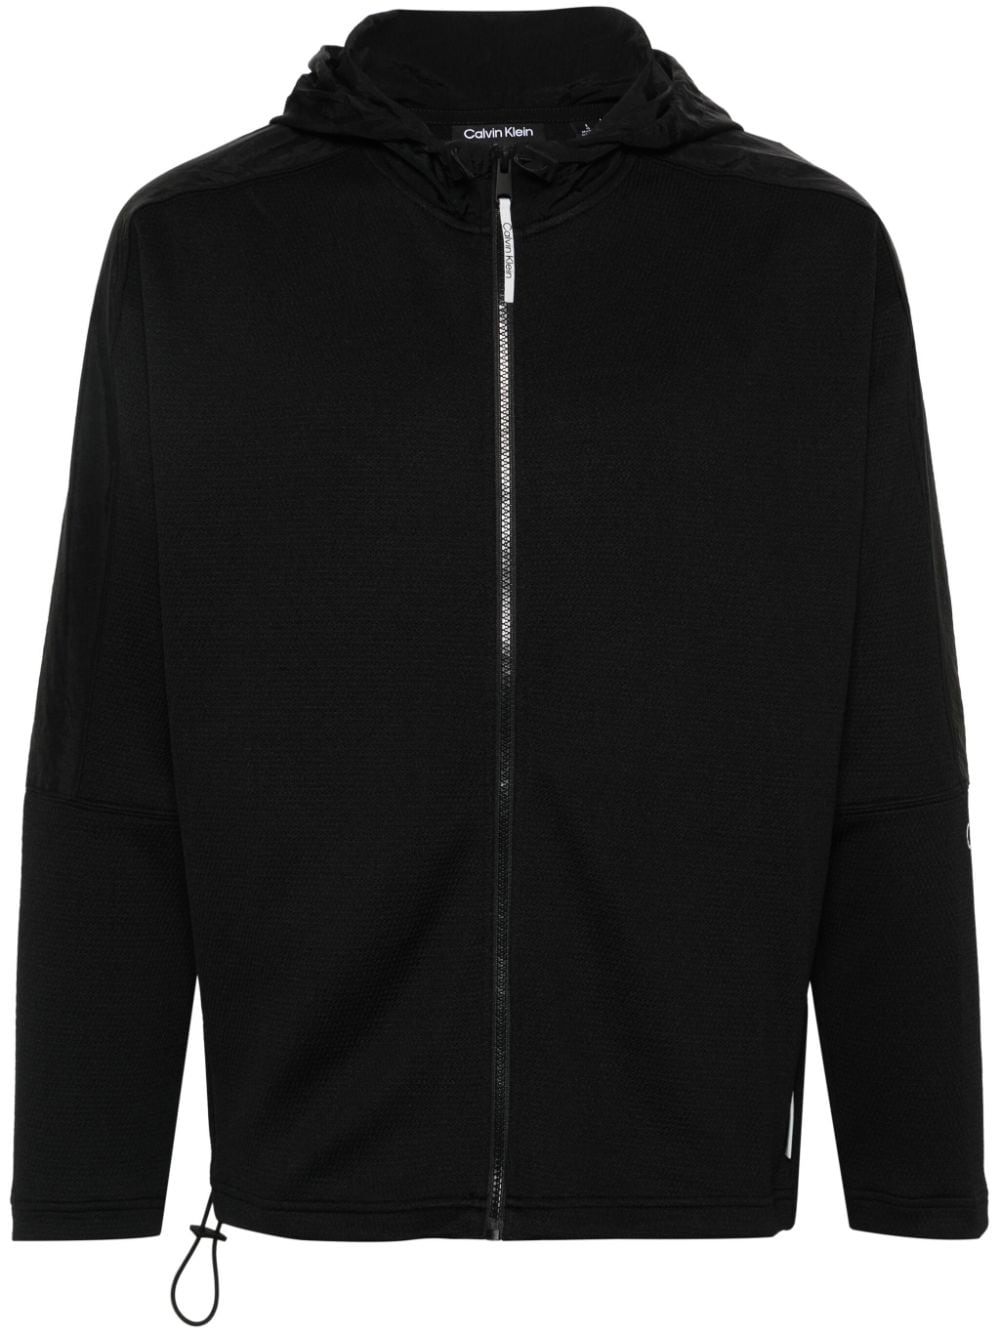 Image 1 of Calvin Klein jacquard hooded jacket